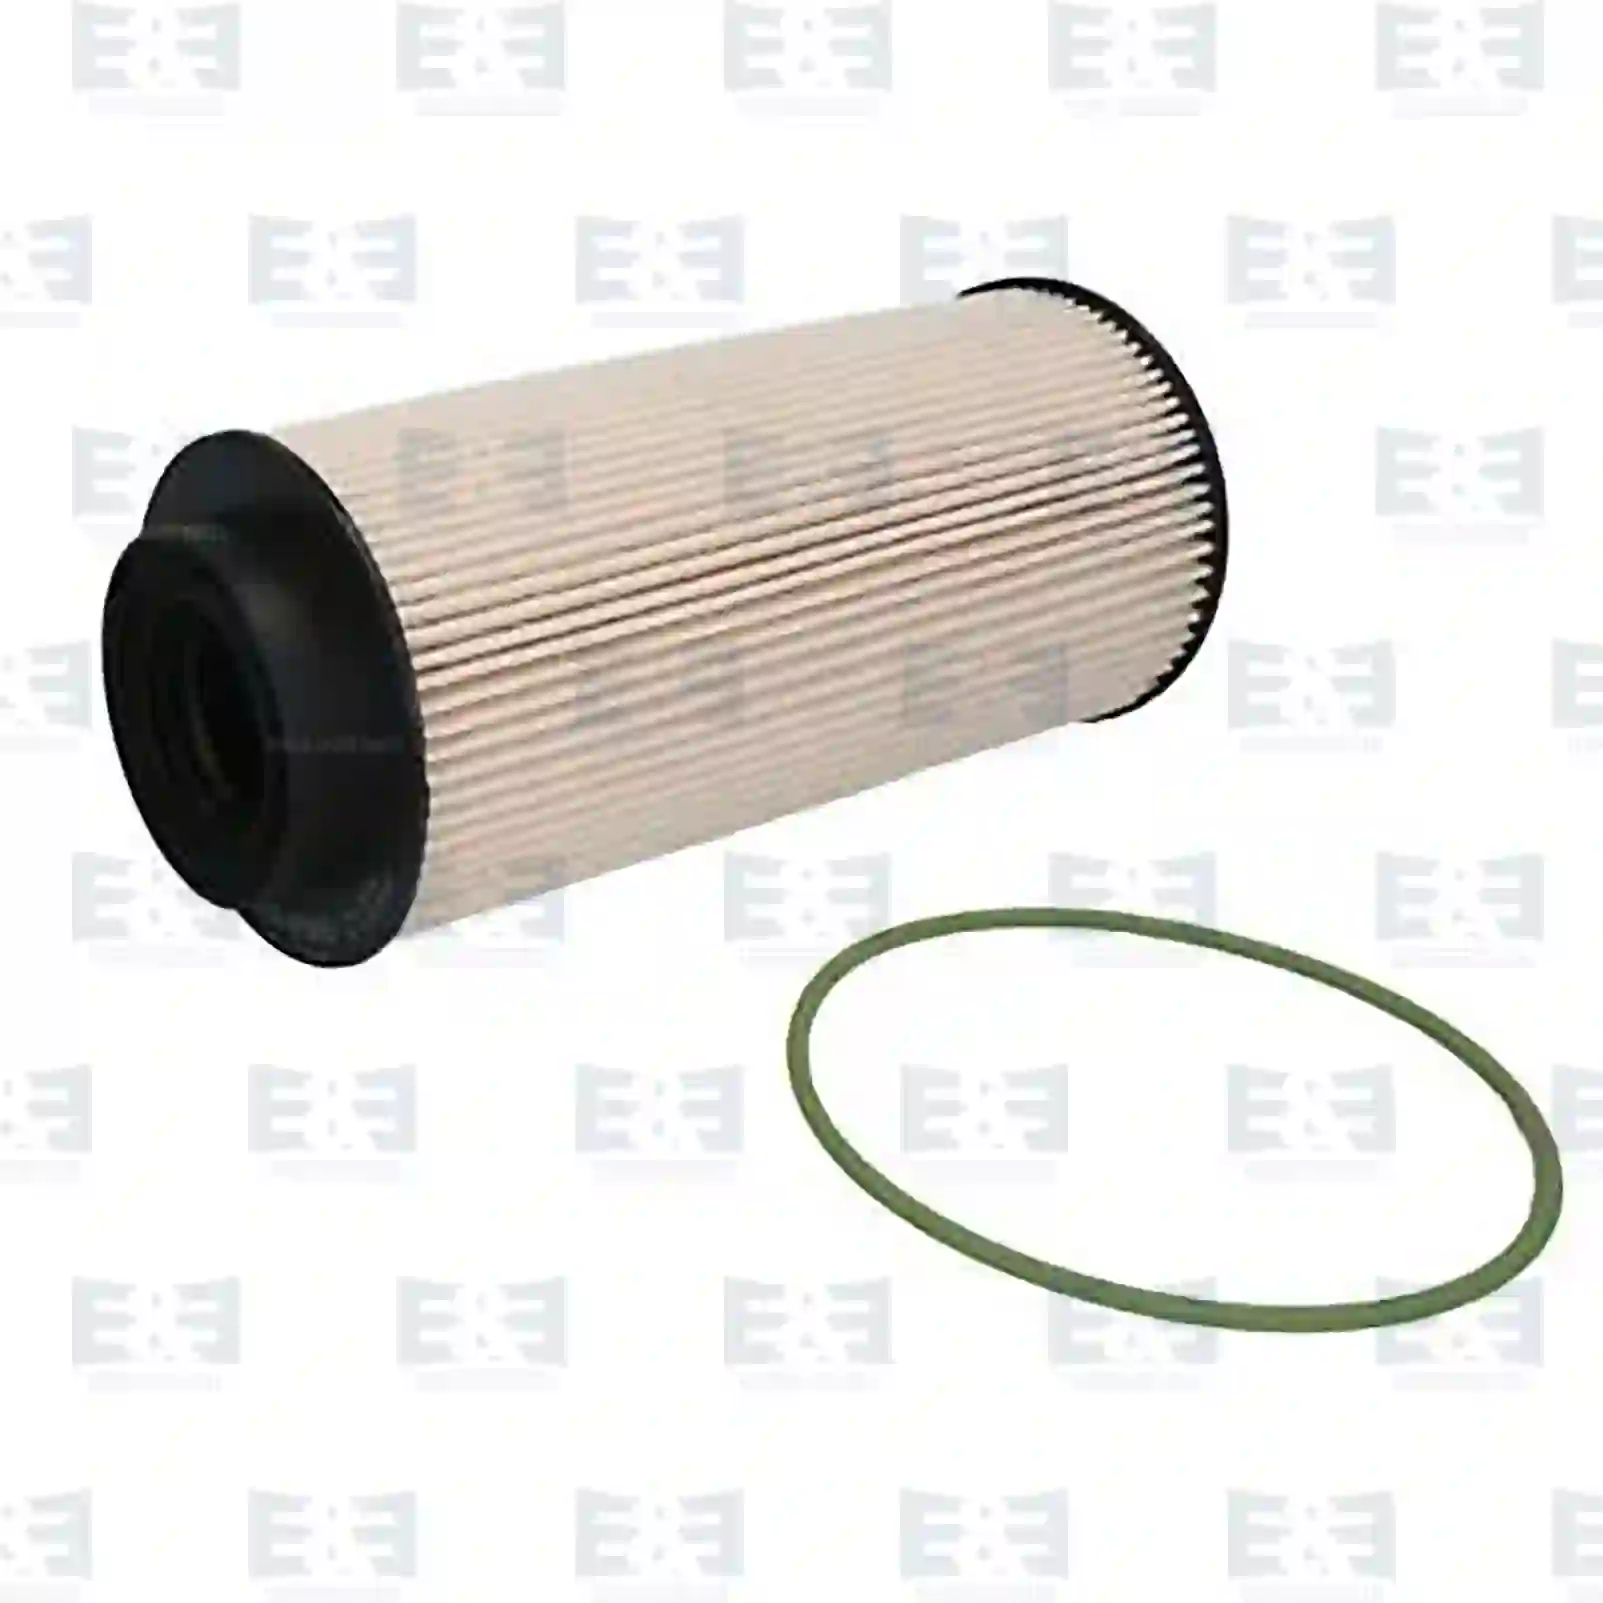  Fuel filter insert || E&E Truck Spare Parts | Truck Spare Parts, Auotomotive Spare Parts